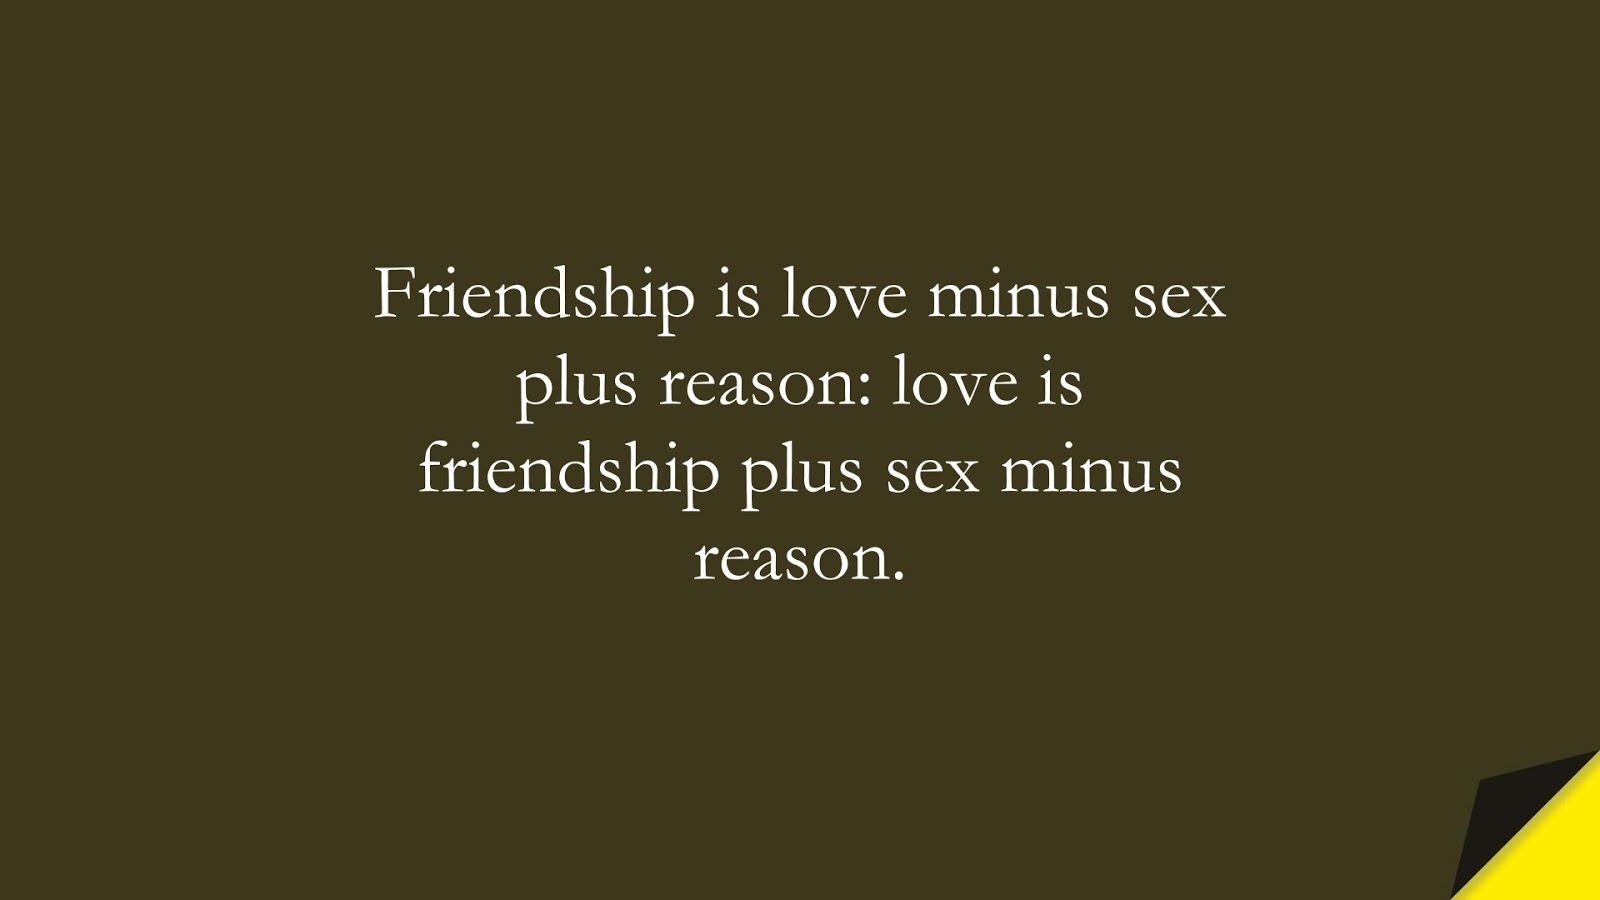 Friendship is love minus sex plus reason: love is friendship plus sex minus reason.FALSE